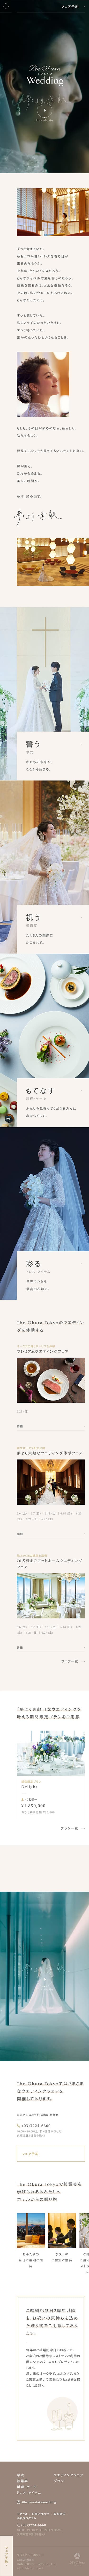 The Okura Tokyo ウエディング